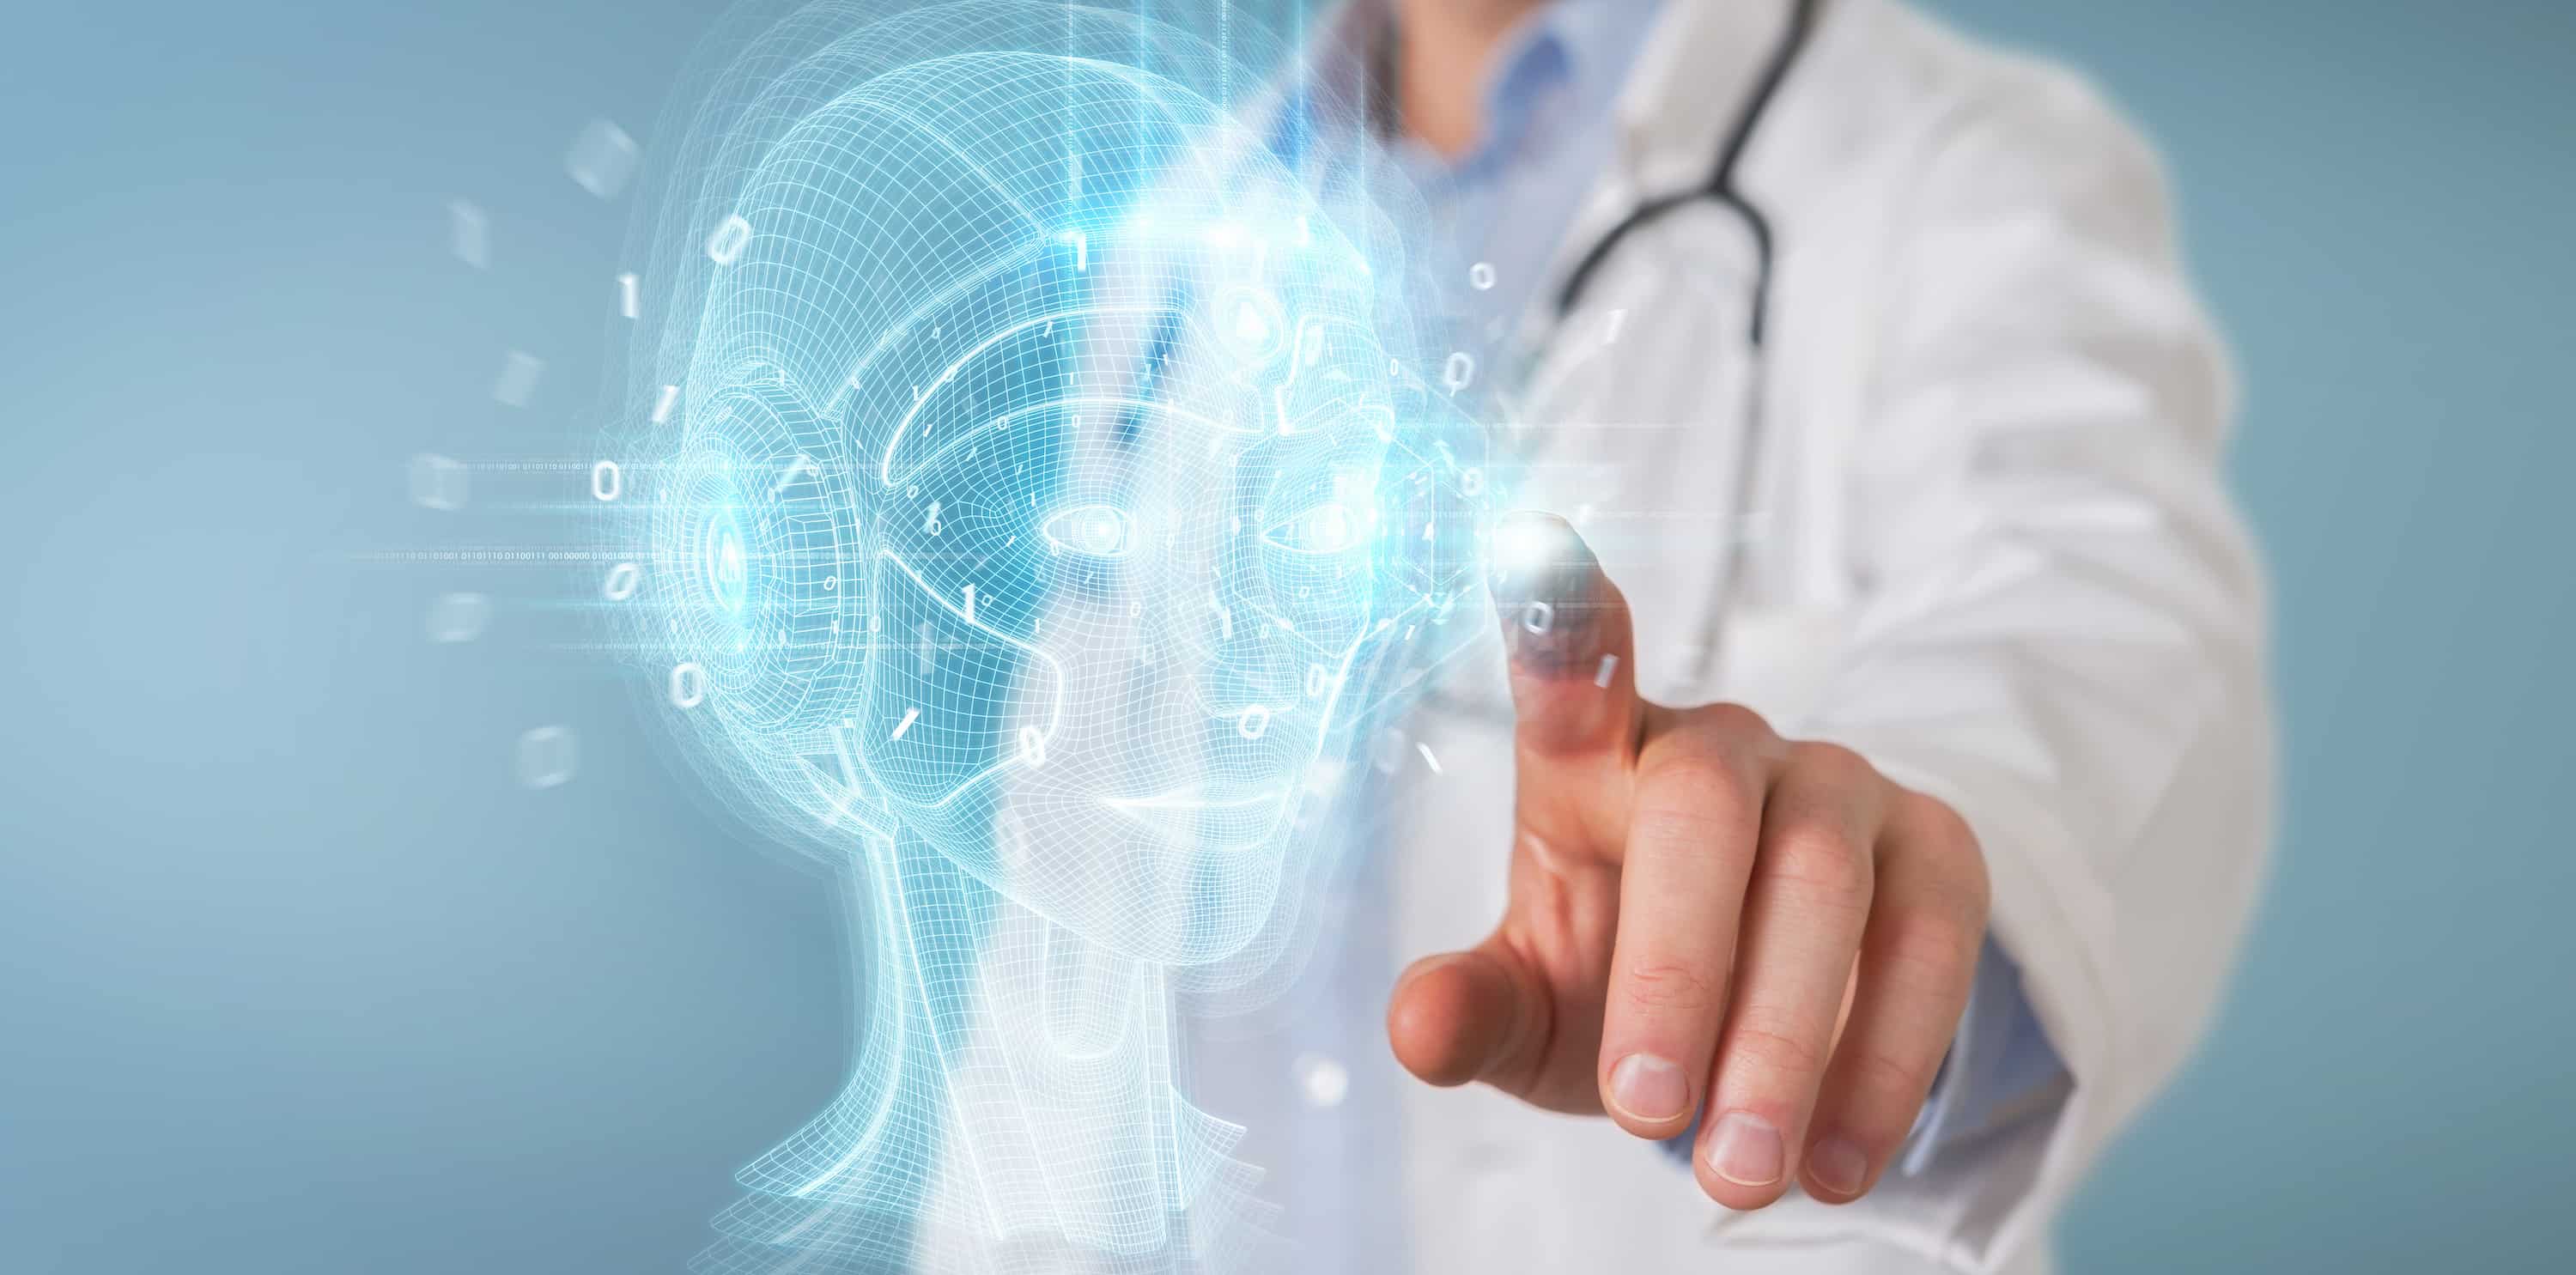 Doctor using digital artificial intelligence head interface 3D rendering